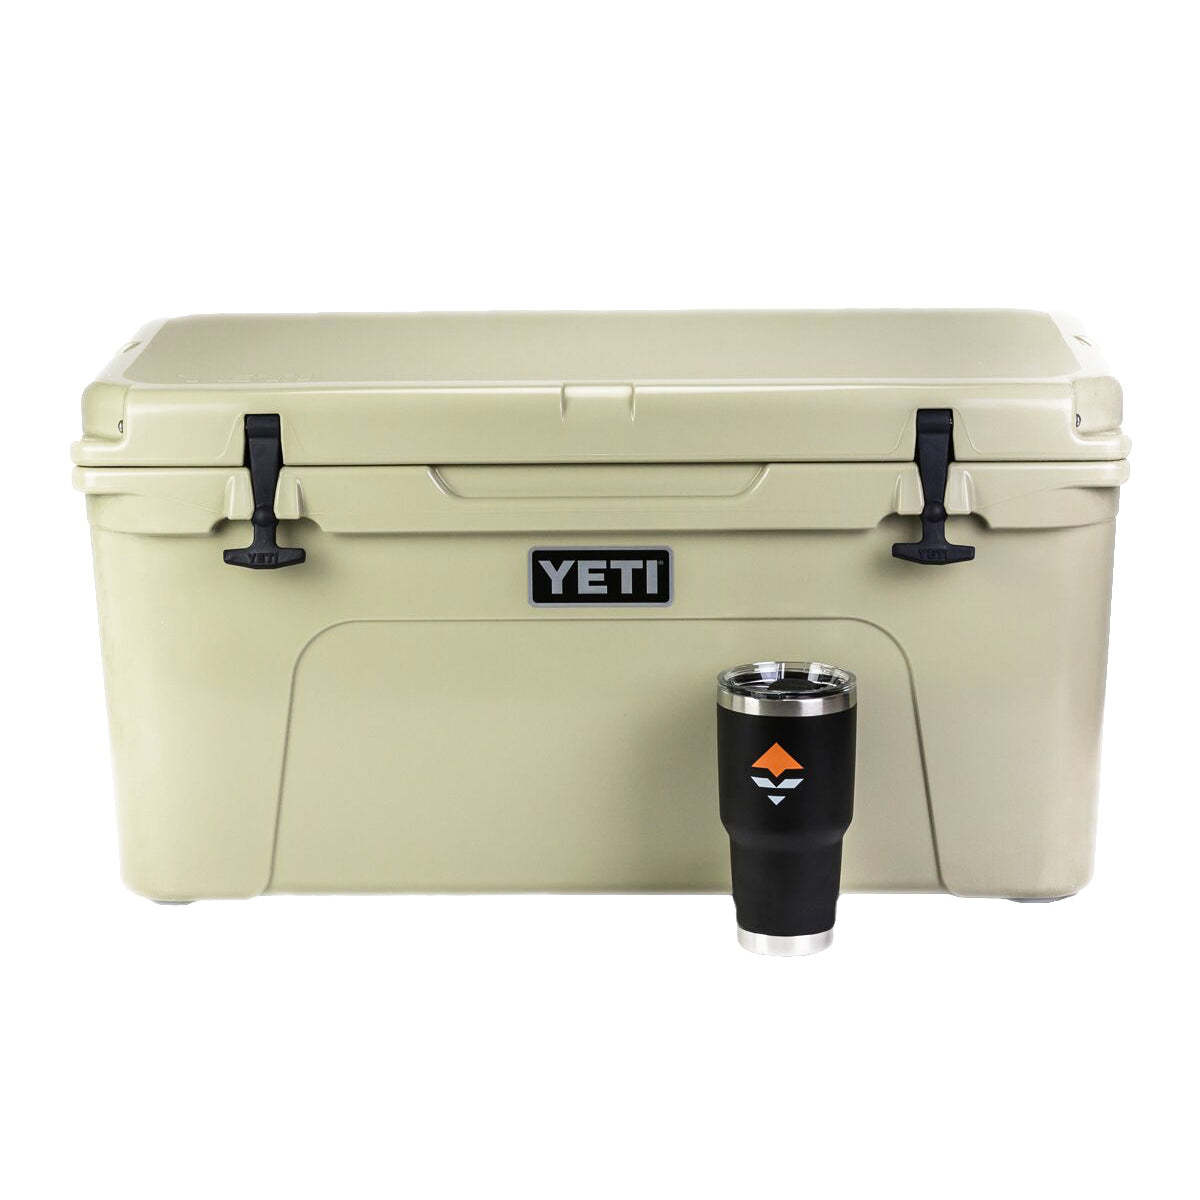 YETI Tundra 75 Cooler & Free goHUNT Rambler by YETI | Camping - goHUNT Shop